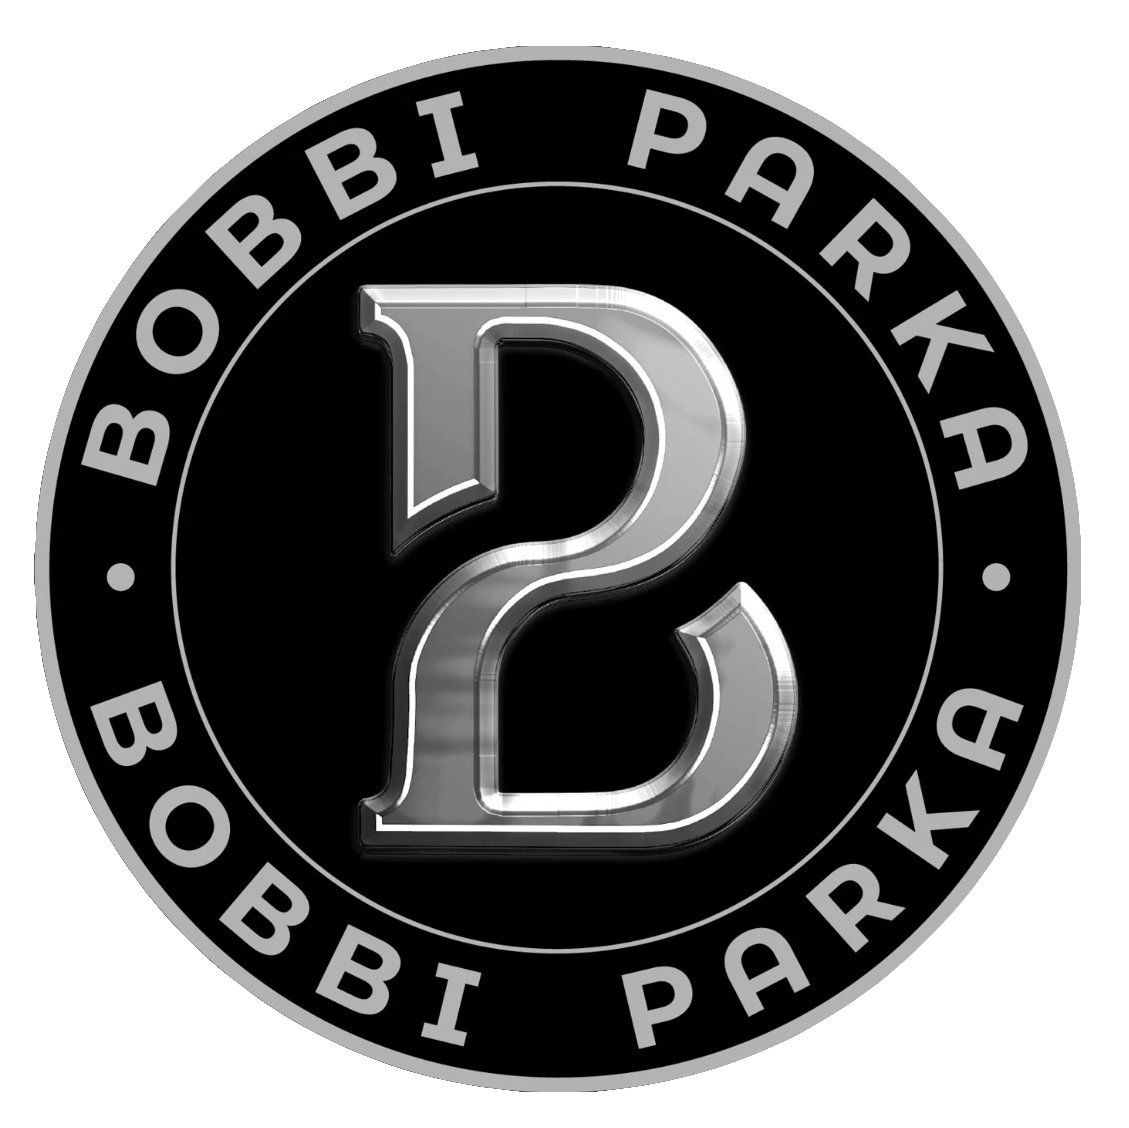 Bobbi Parka